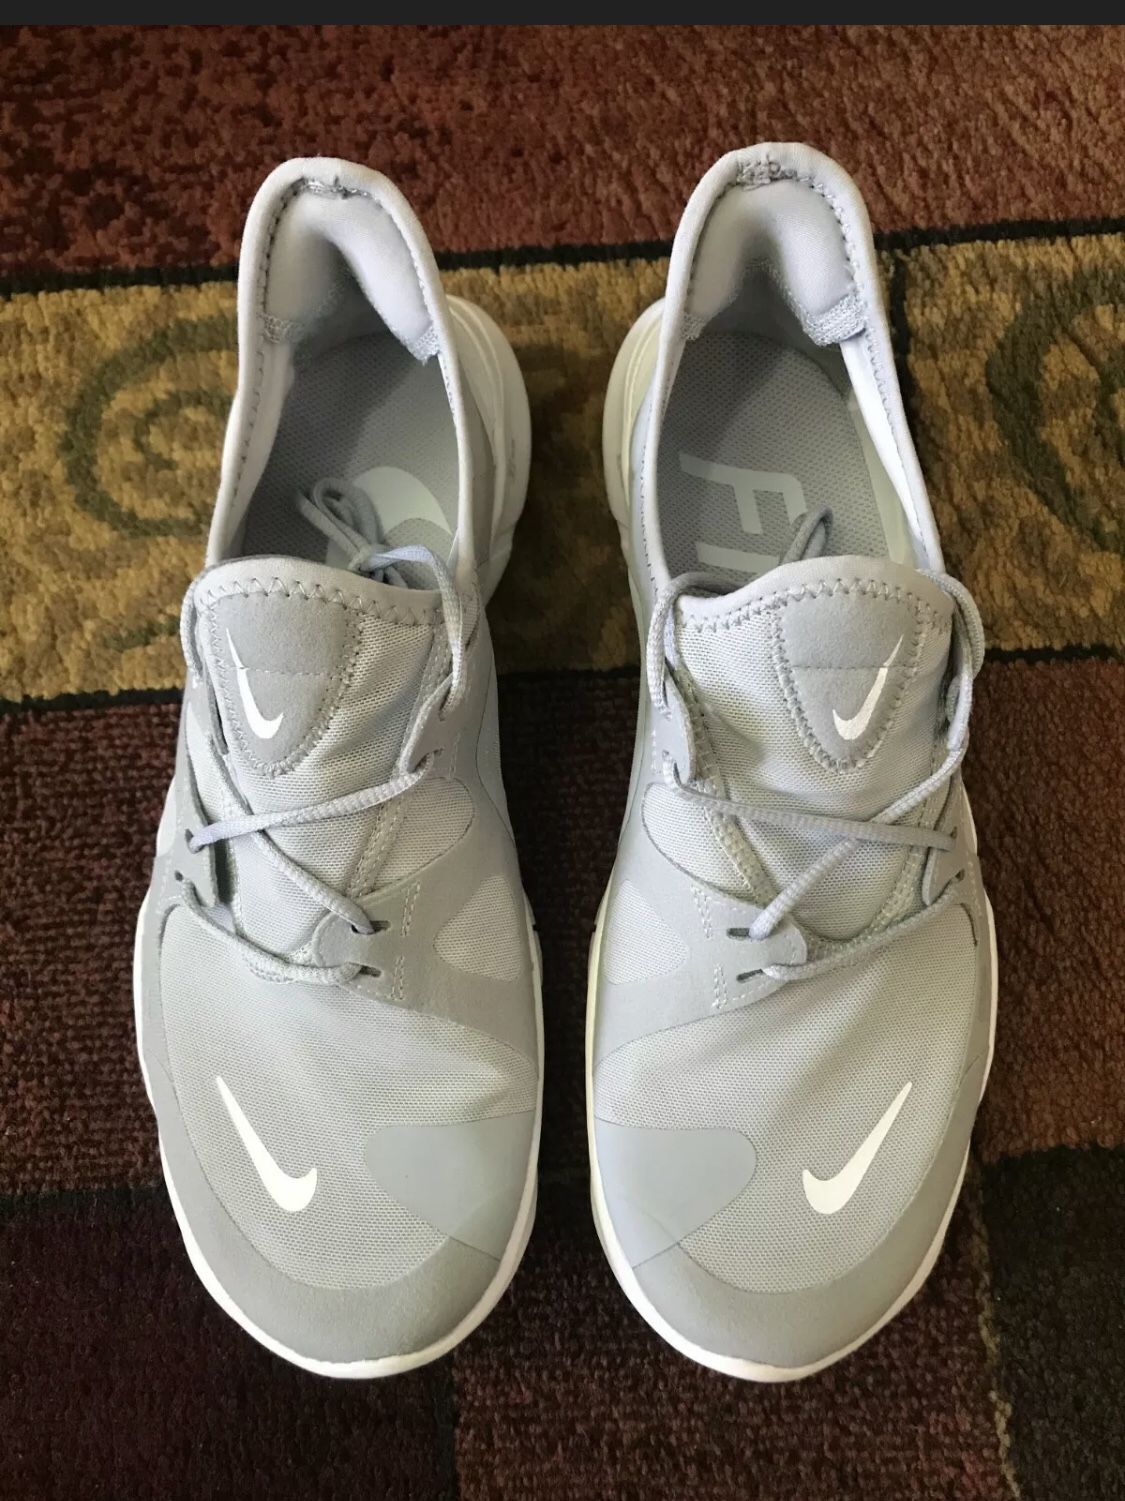 NIKE Free RN 5.0 Wolf Grey/White Running Shoes AQ1289-001 Men’s Size 8